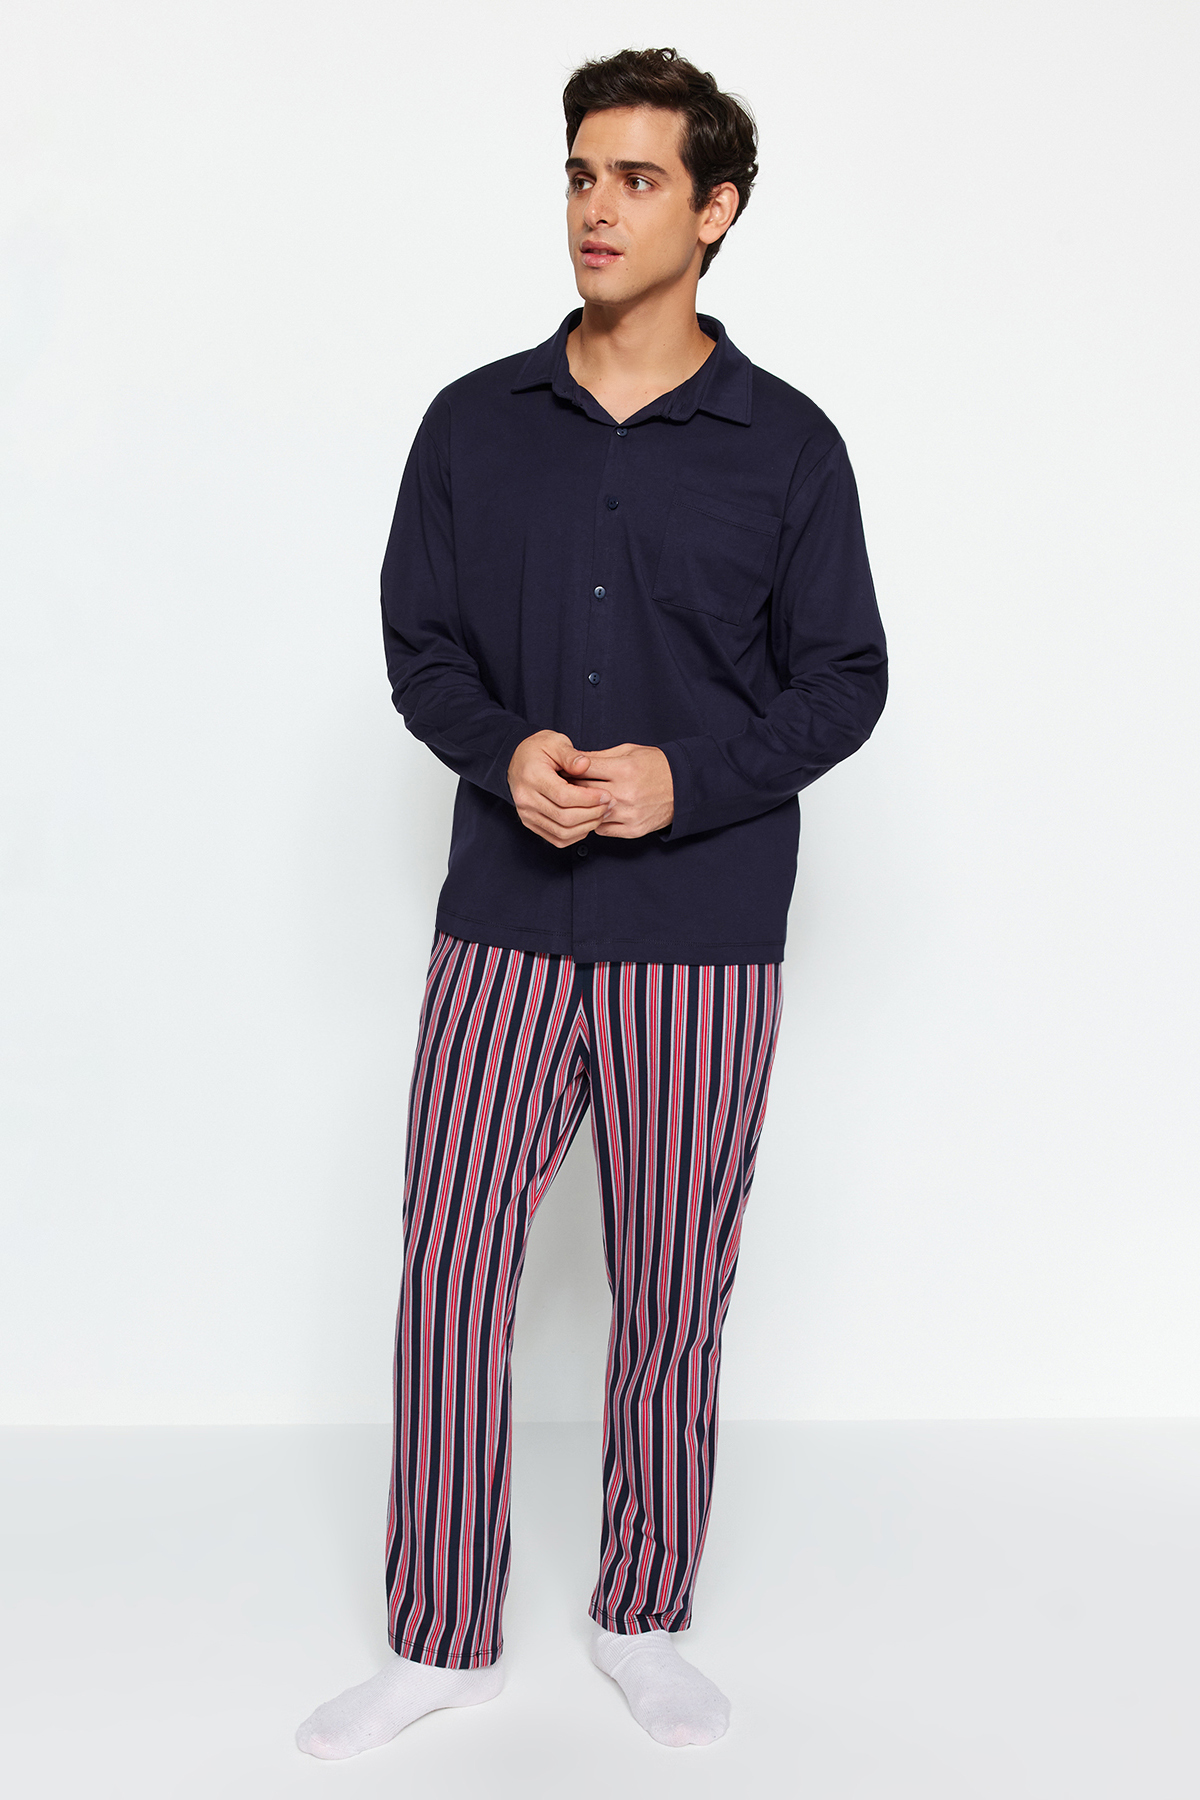 Trendyol Men's Navy Blue Bottom Stripe Knitted Pajamas Set